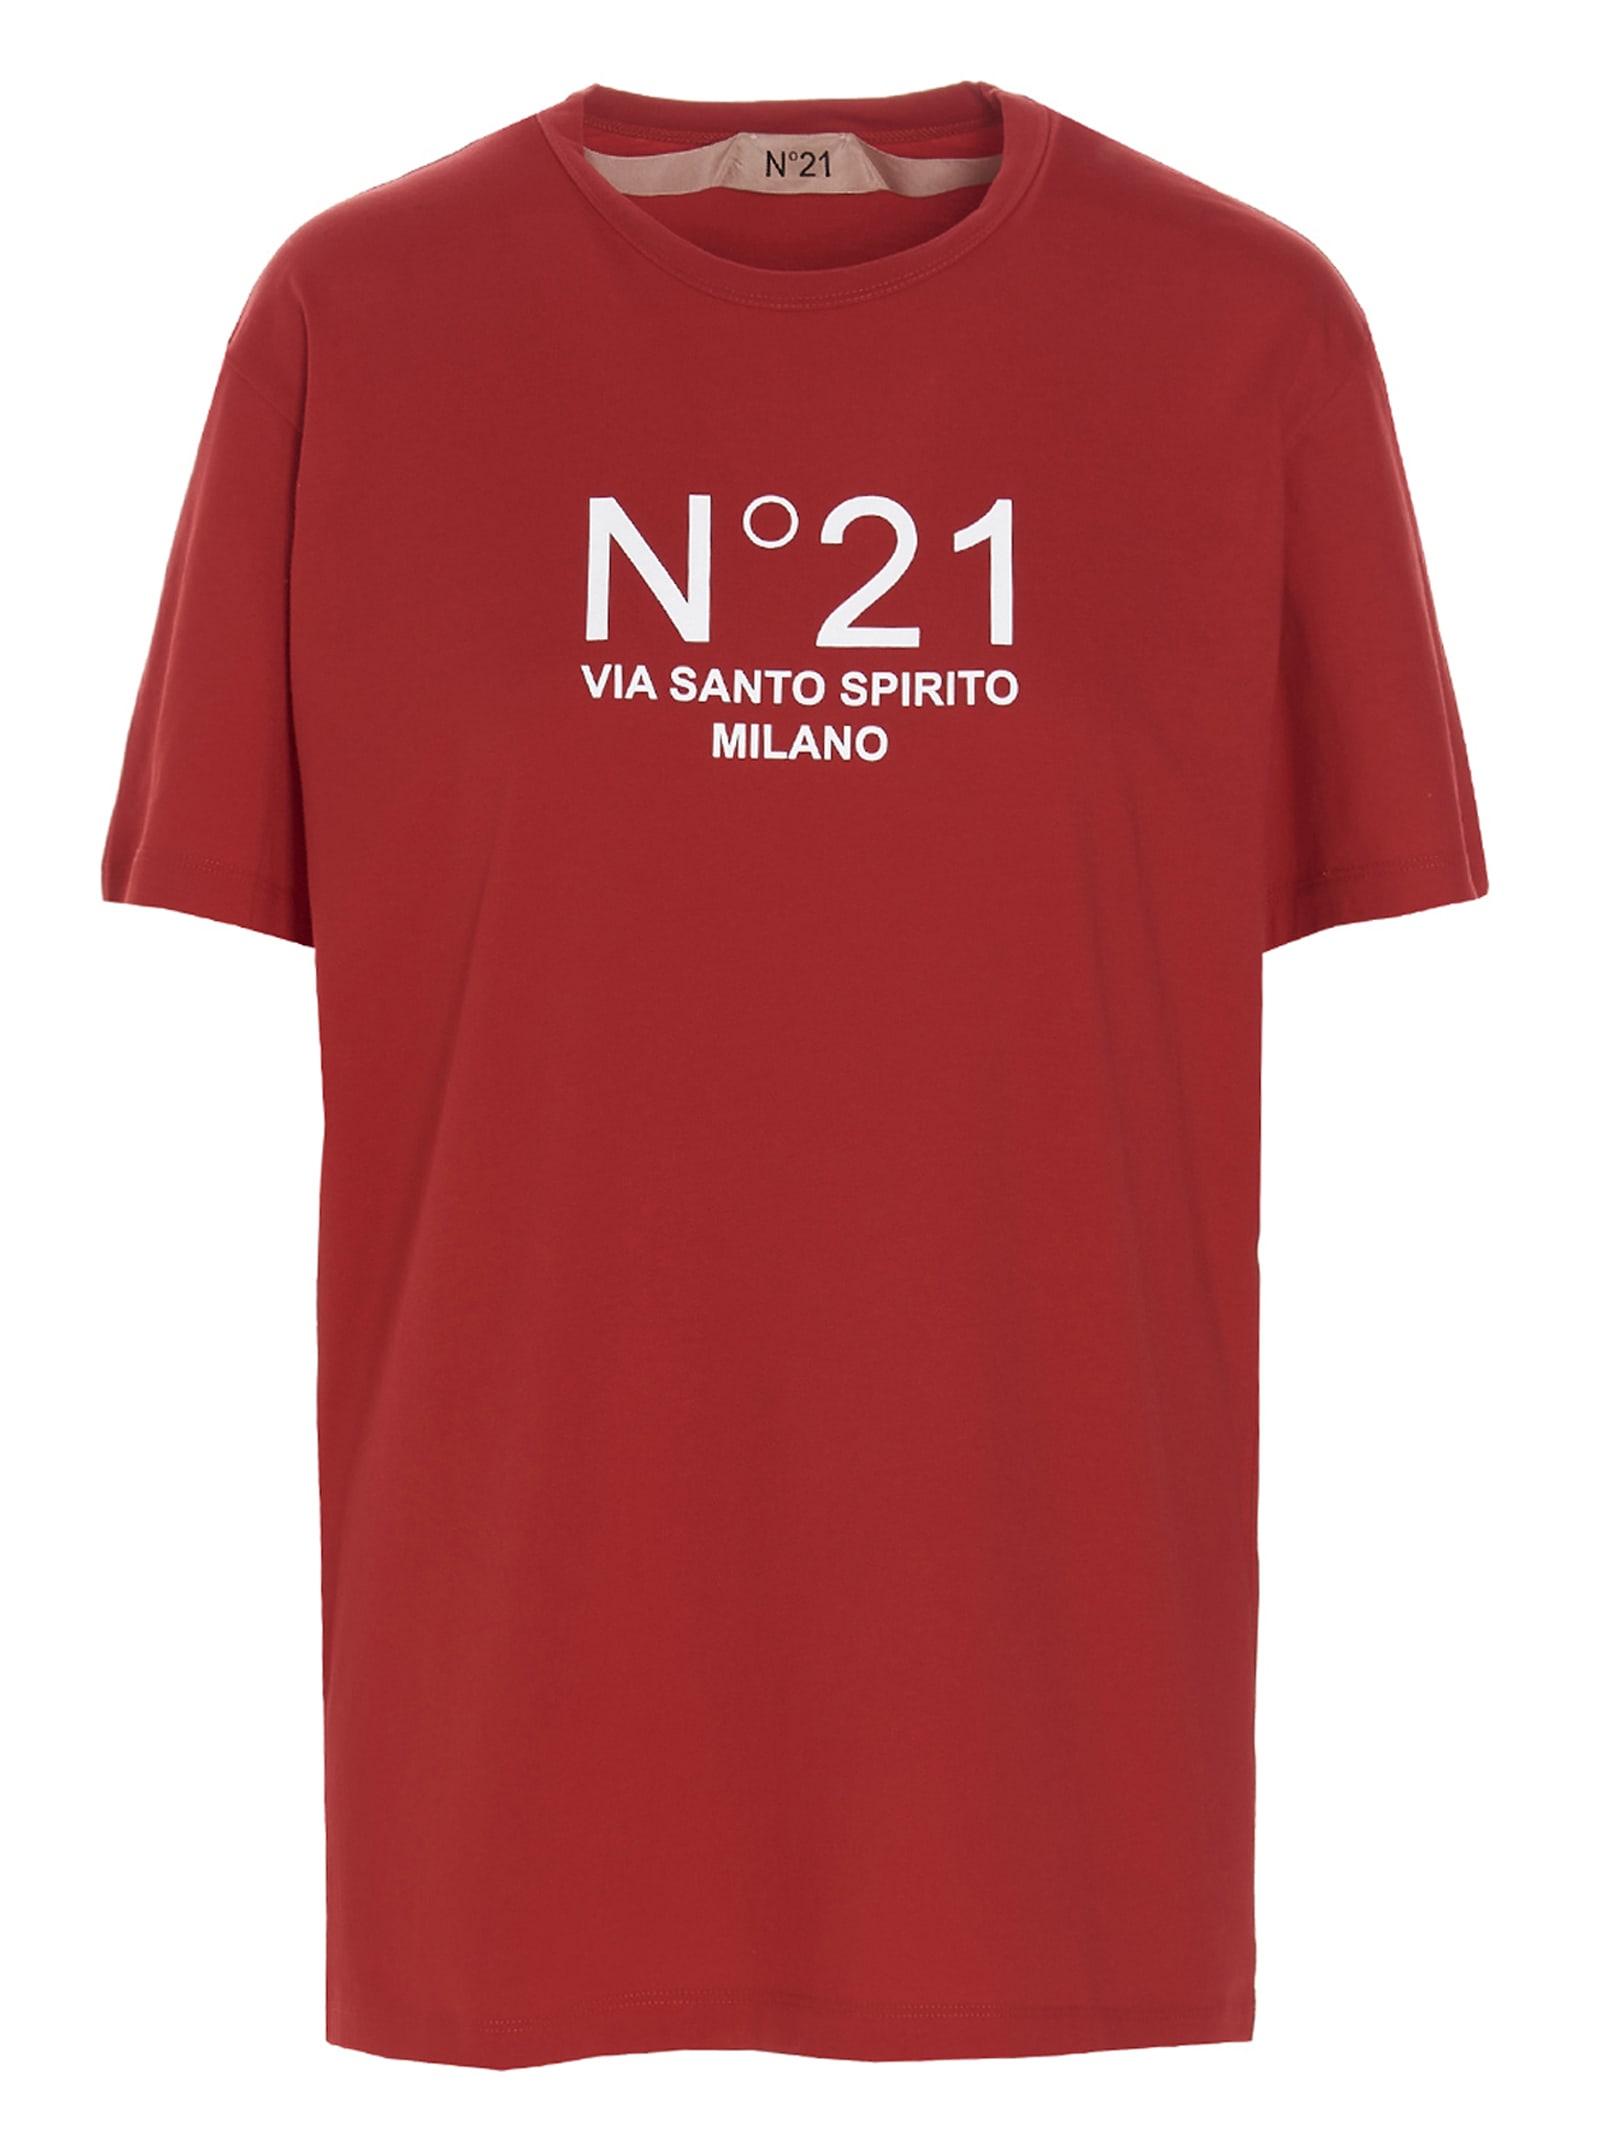 N.21 n21 Santo Spirito T-shirt